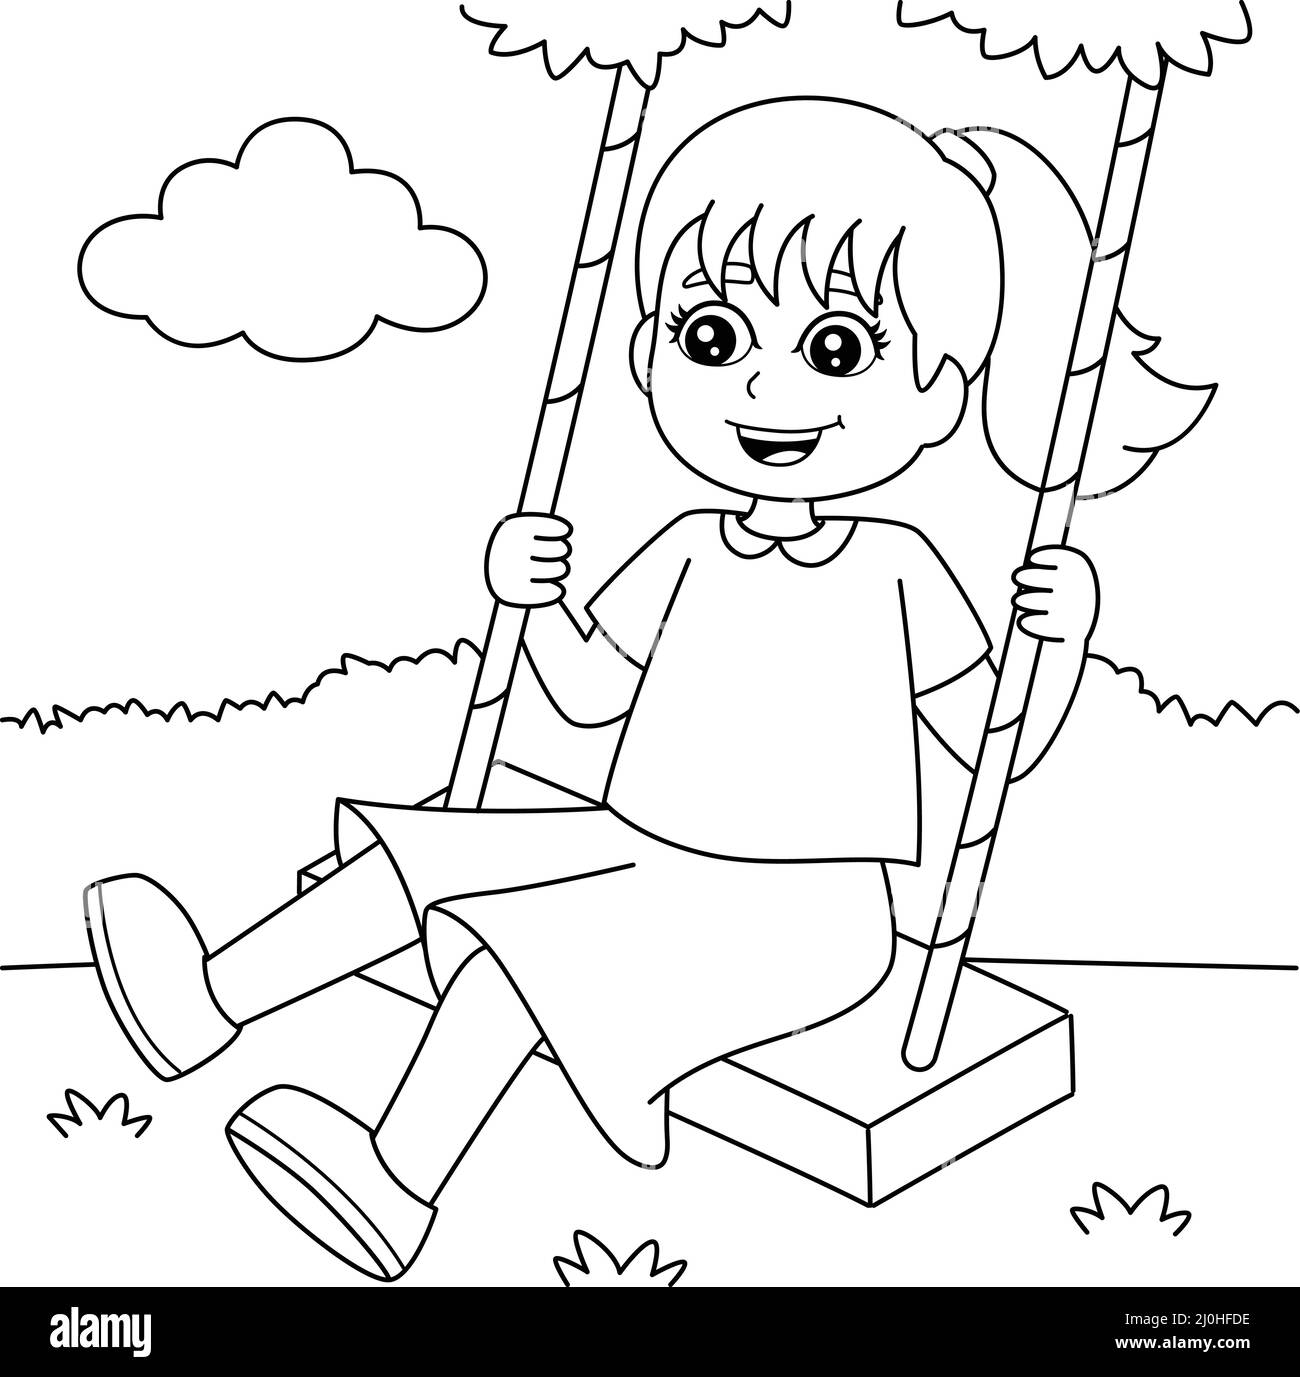 https://c8.alamy.com/comp/2J0HFDE/girl-on-a-swing-coloring-page-for-kids-2J0HFDE.jpg